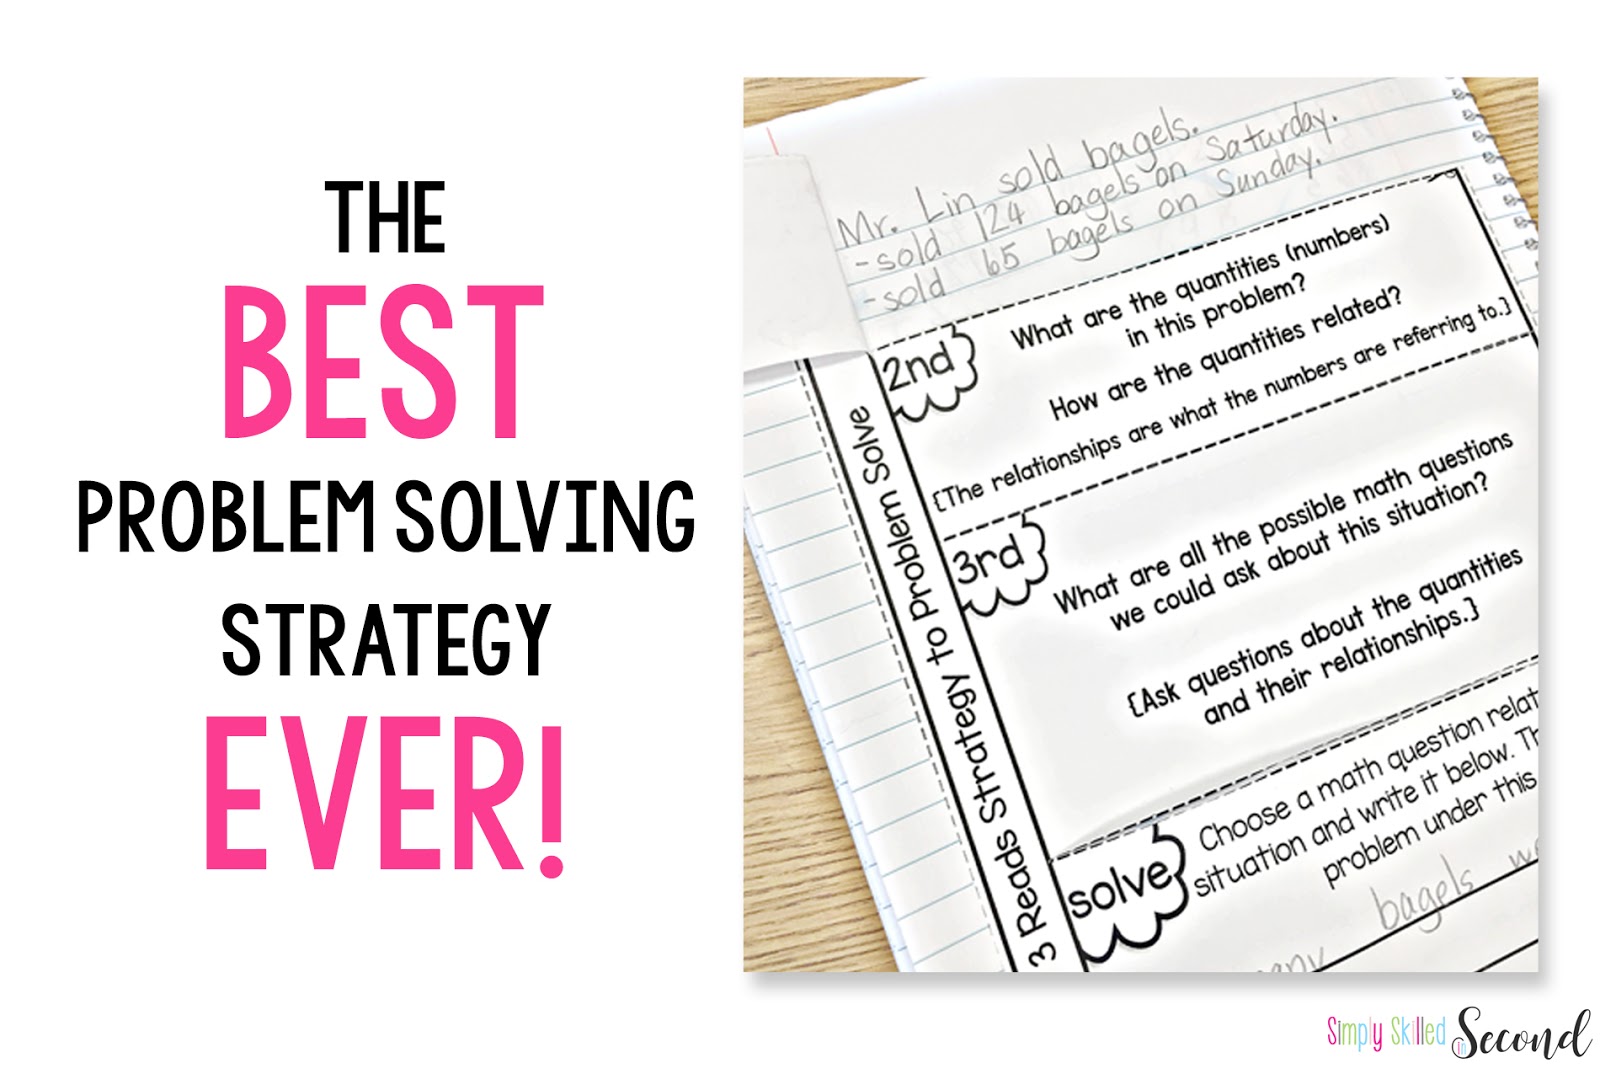 Her good problem. Problem solving Strategy. Get better at problem-solving.